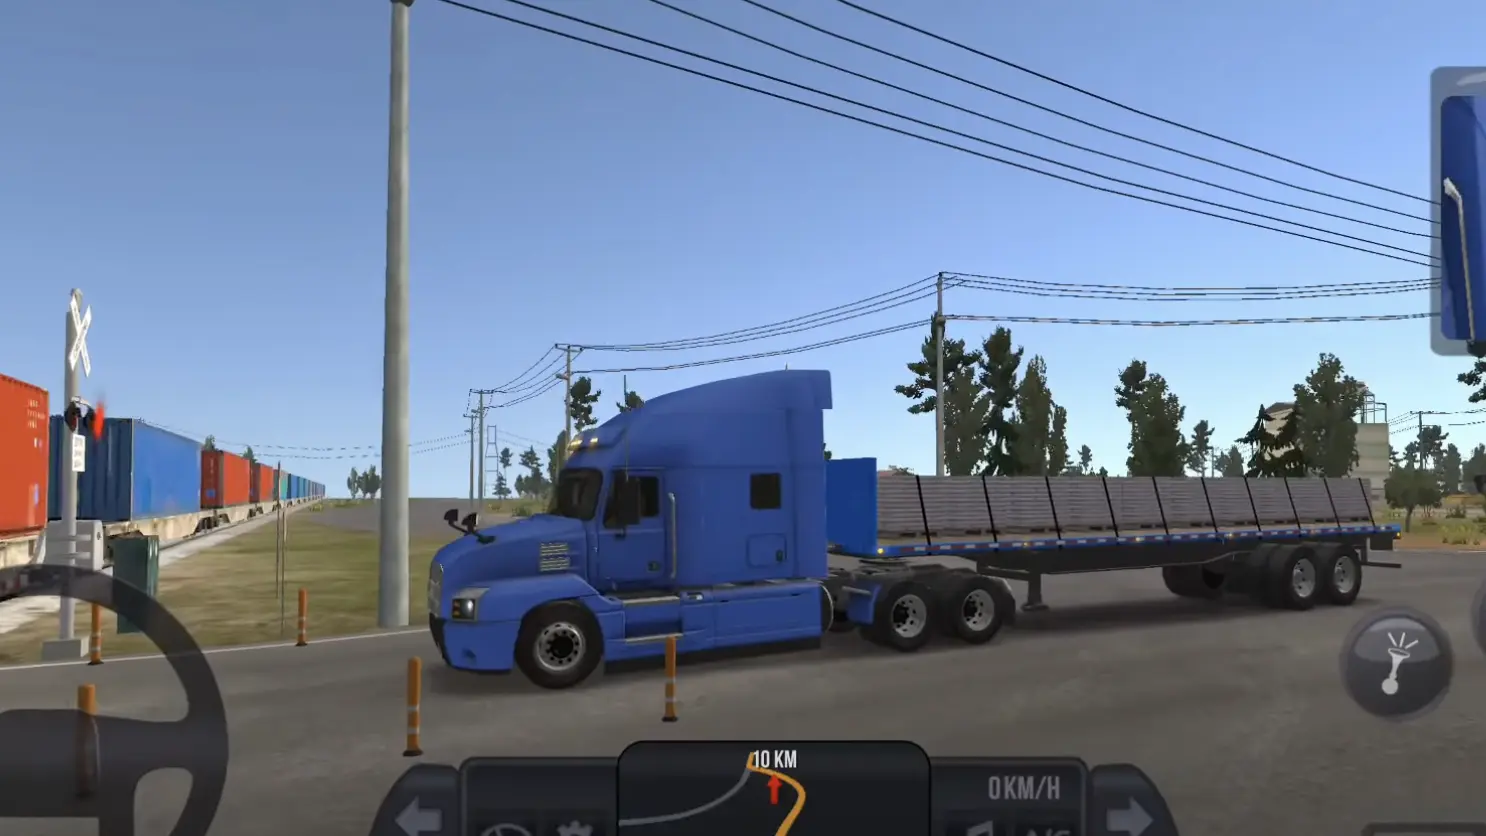 Top Trucks in Truck Simulator